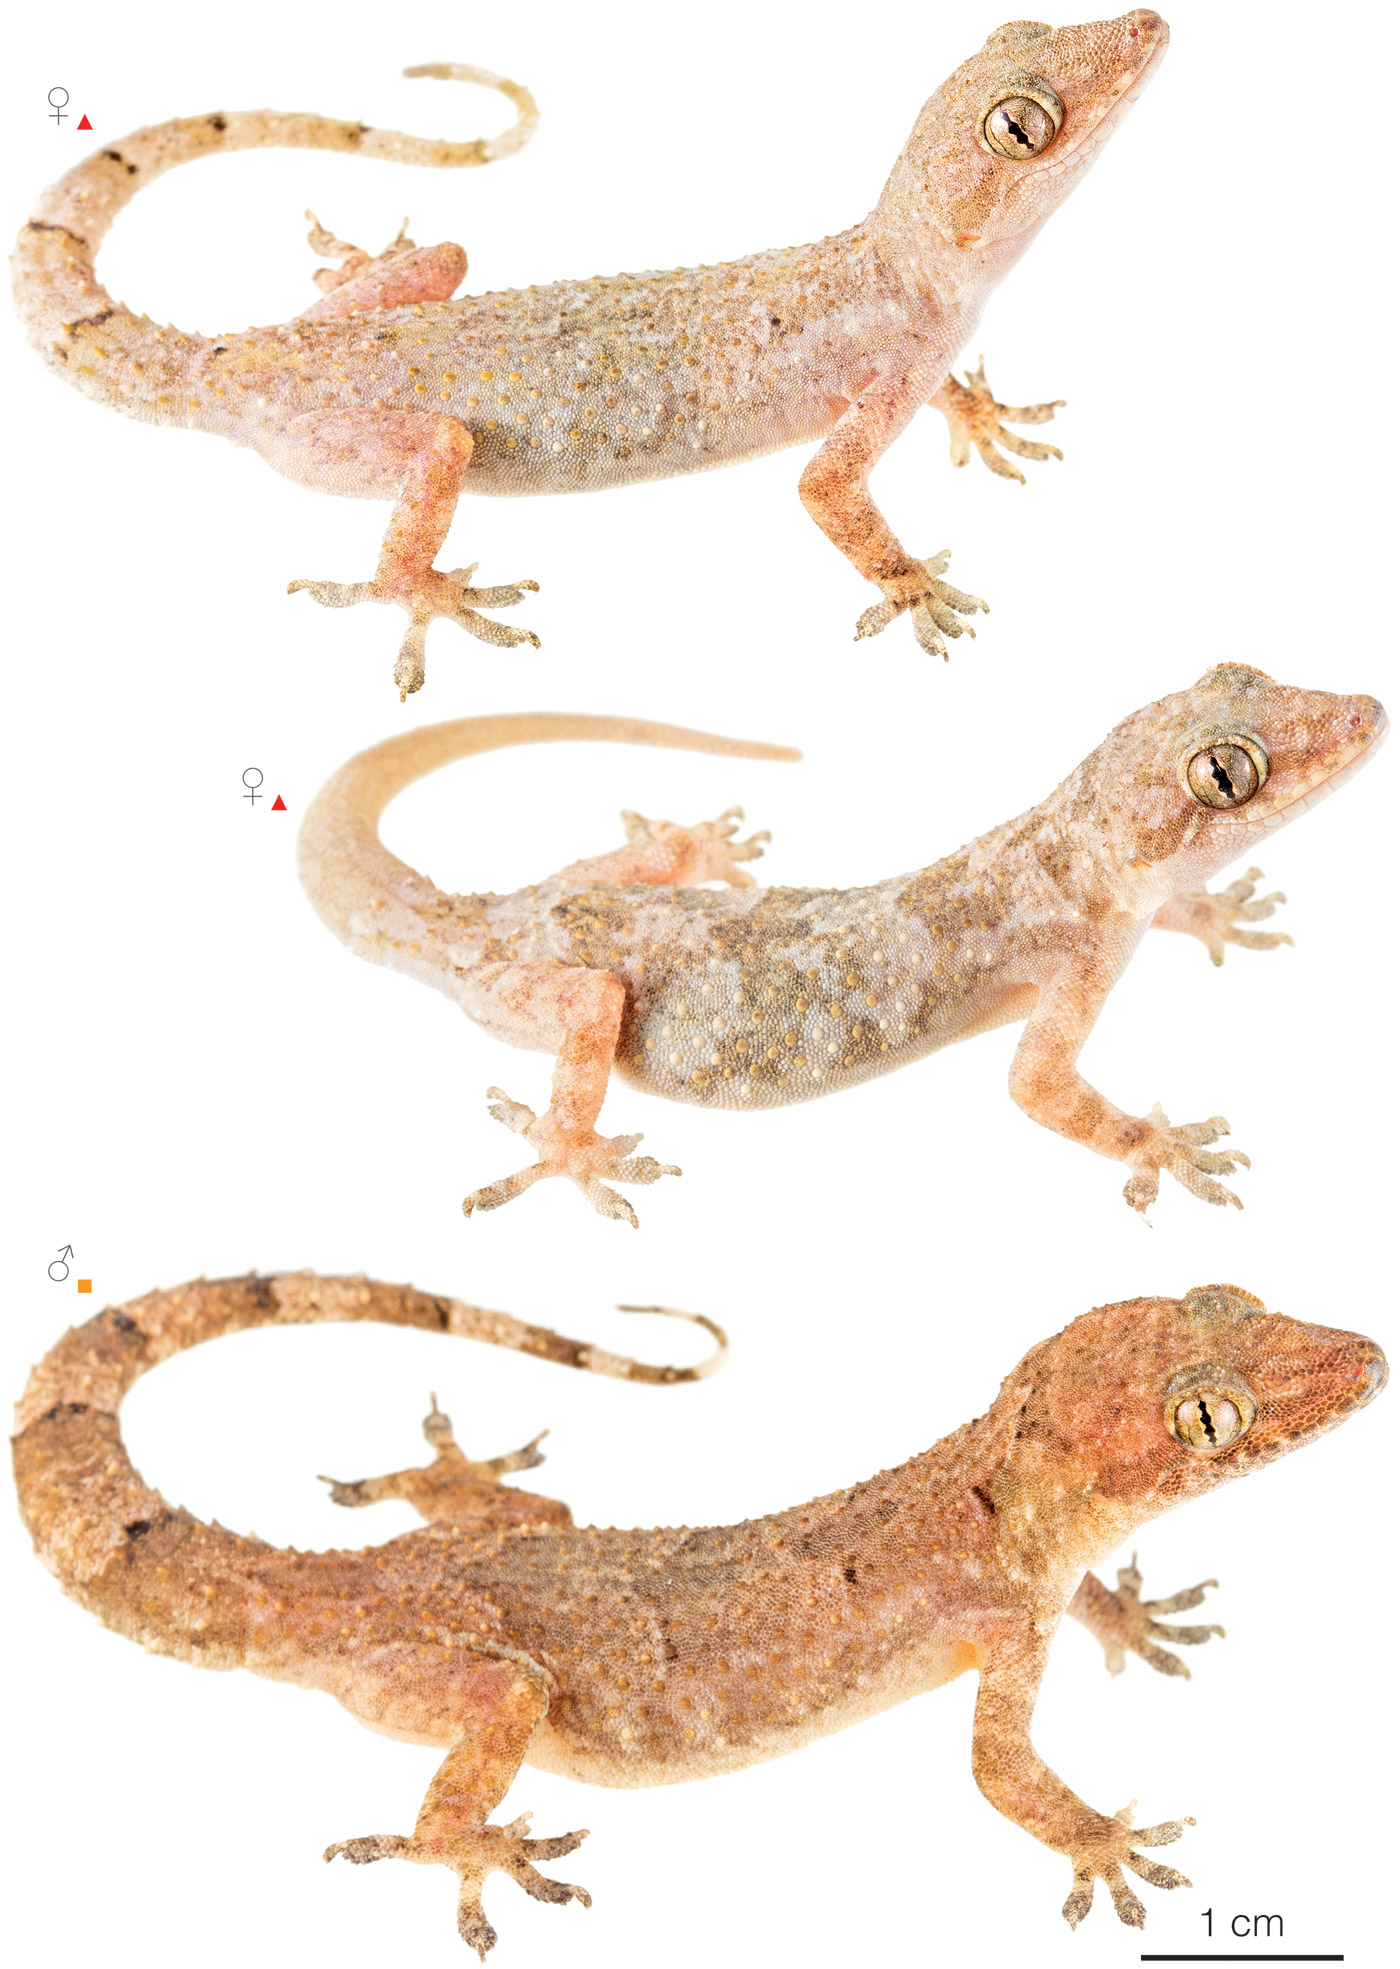 Figure showing variation among individuals of Hemidactylus mabouia